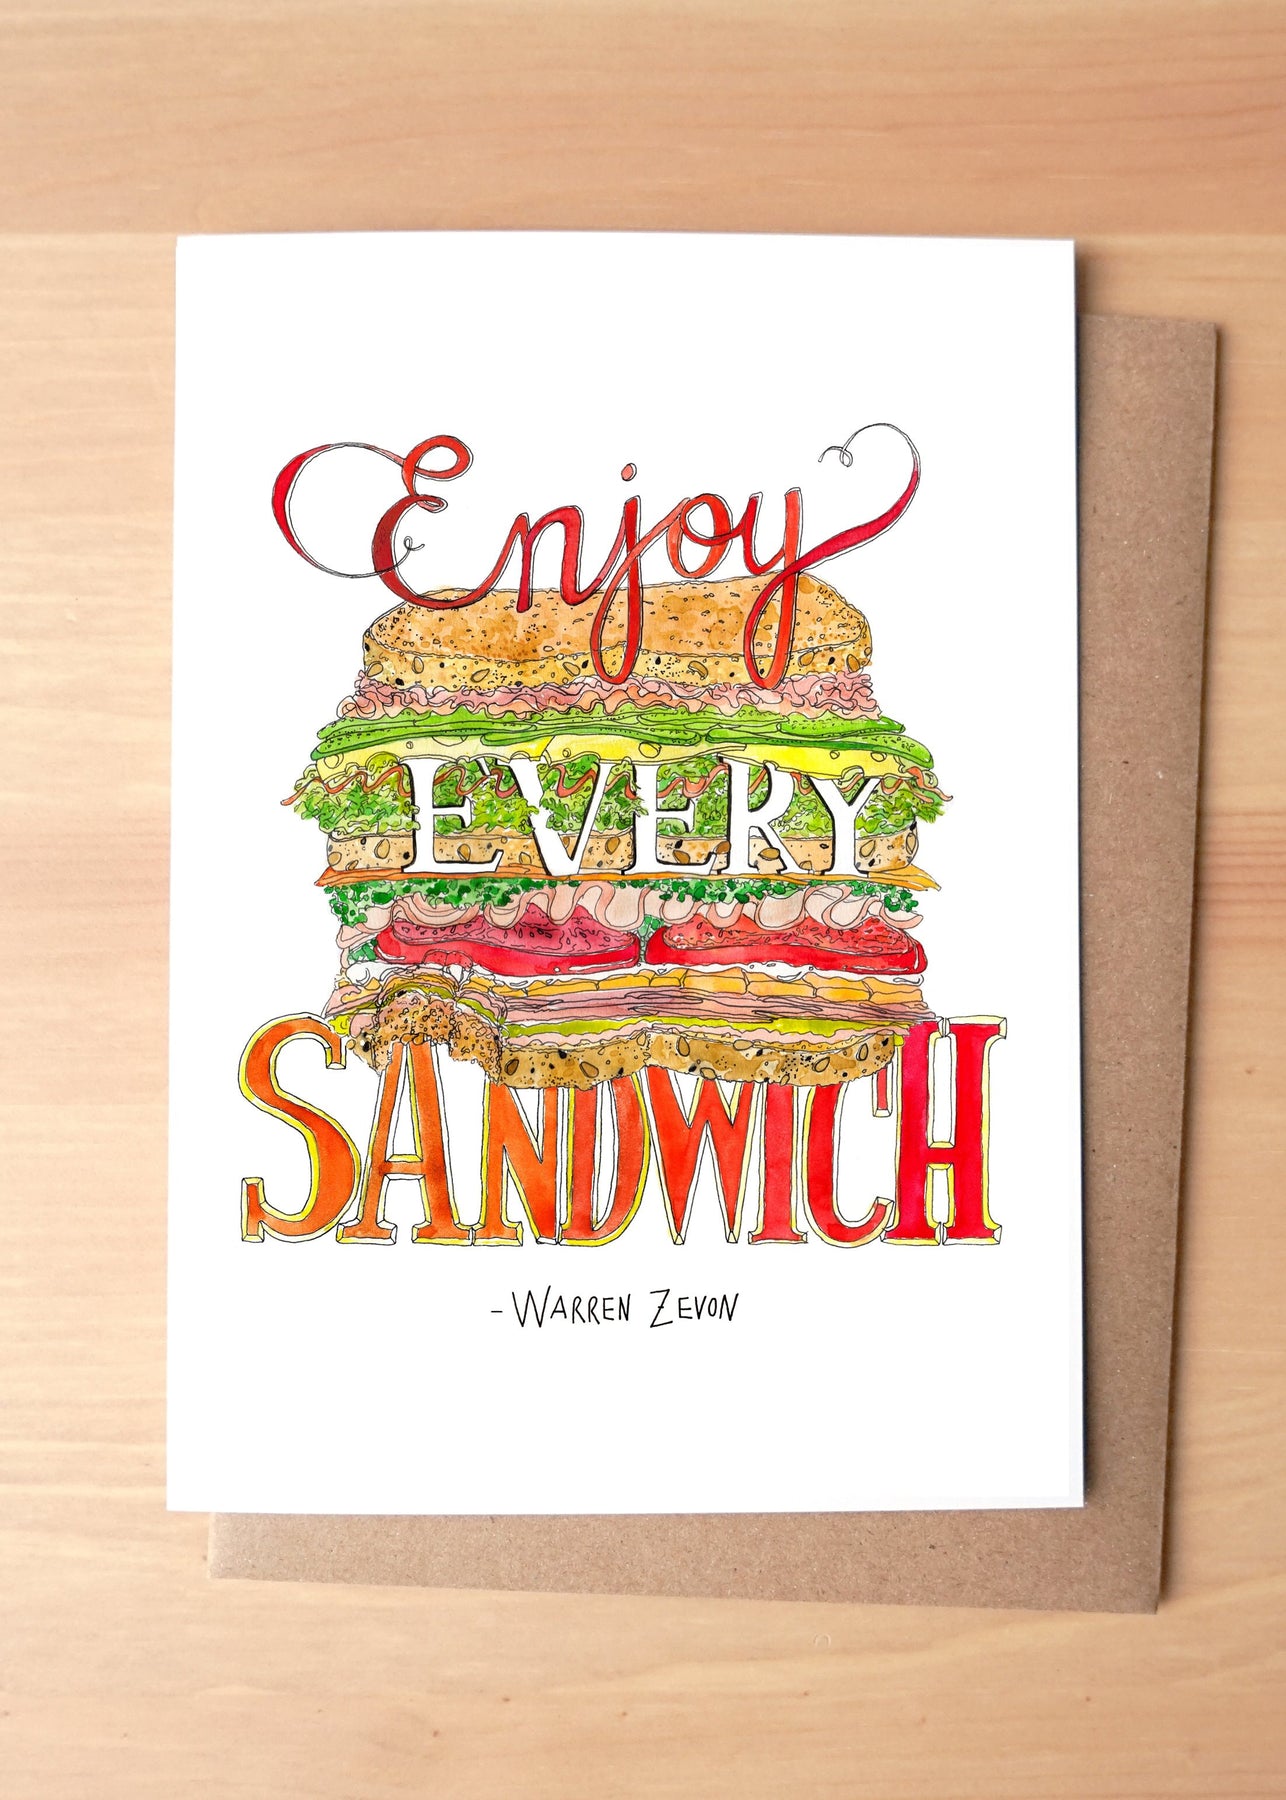 warren zevon enjoy every sandwich t shirt